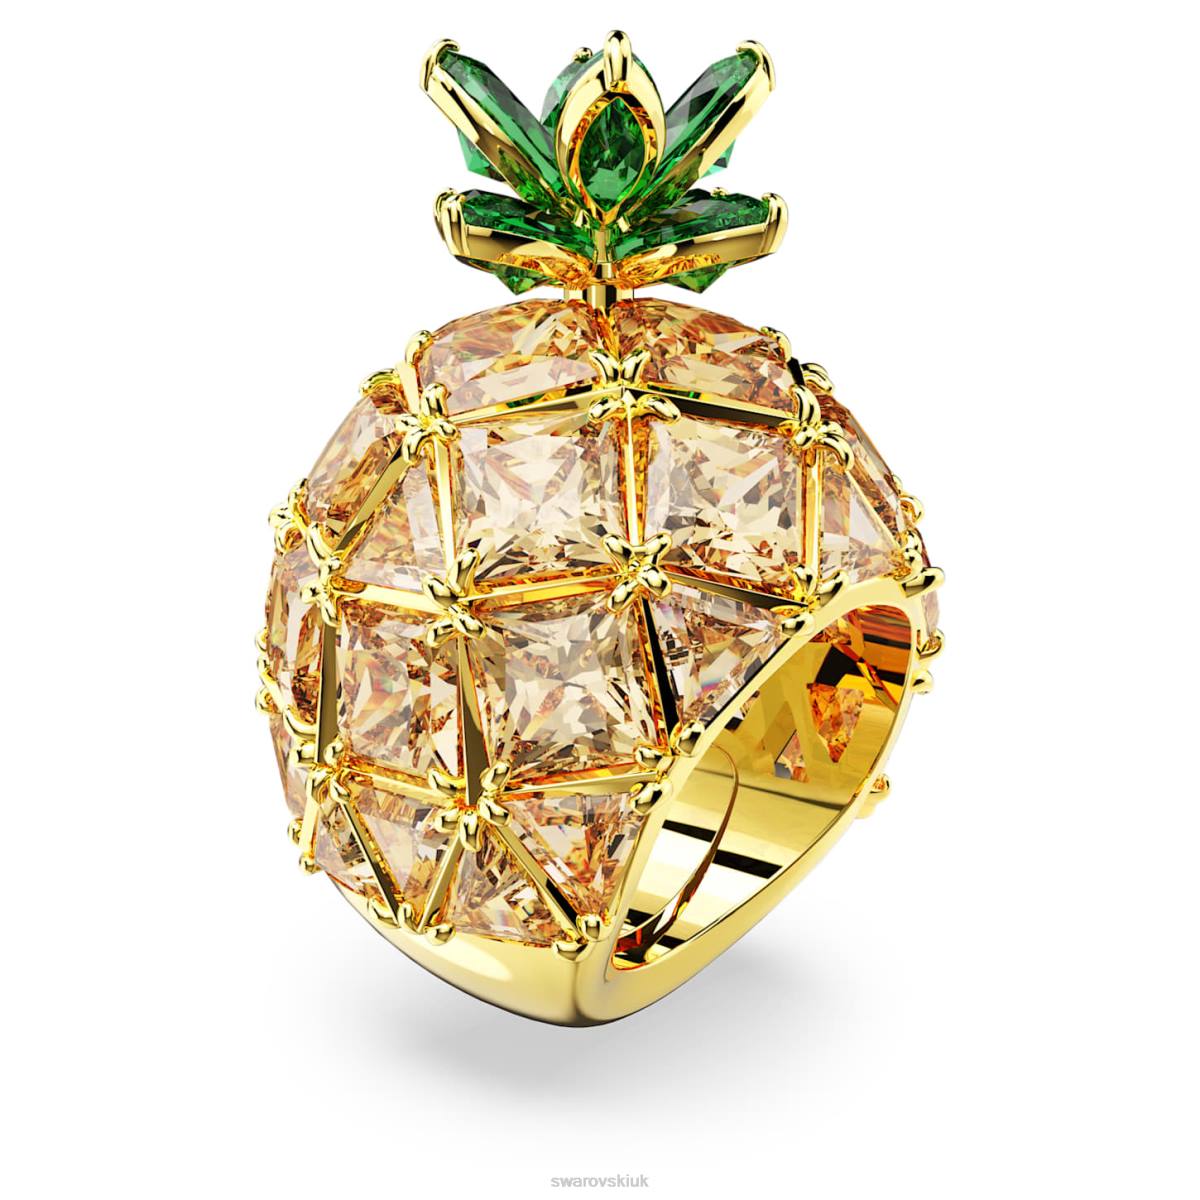 Jewelry Swarovski Idyllia cocktail ring Pineapple, Multicolored, Gold-tone plated 48JX1026